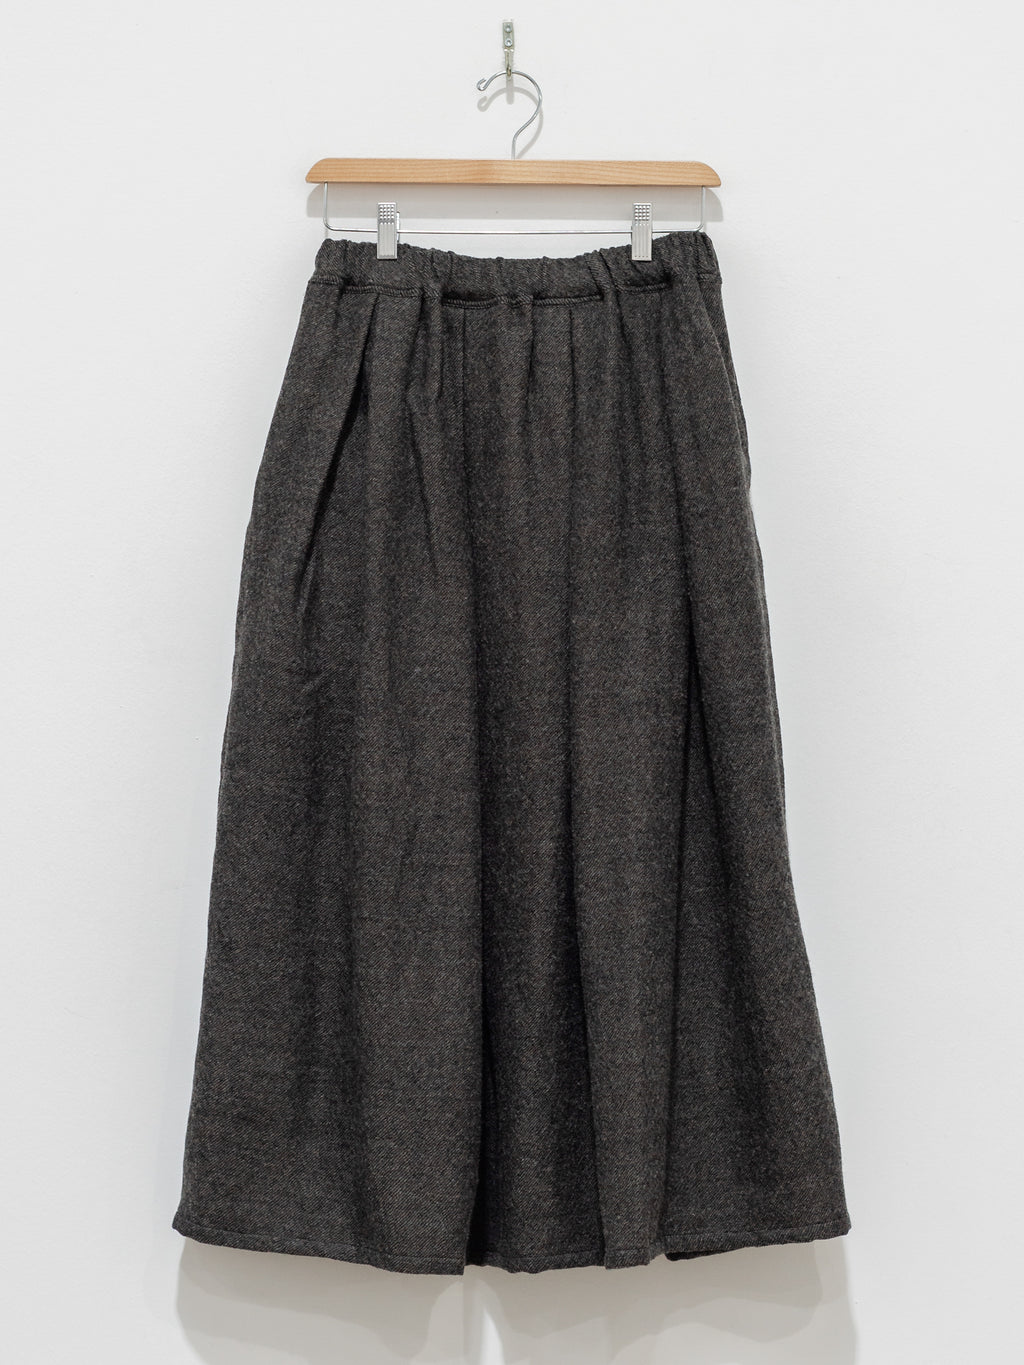 Namu Shop - ICHI Wool Skirt - Dark Brown